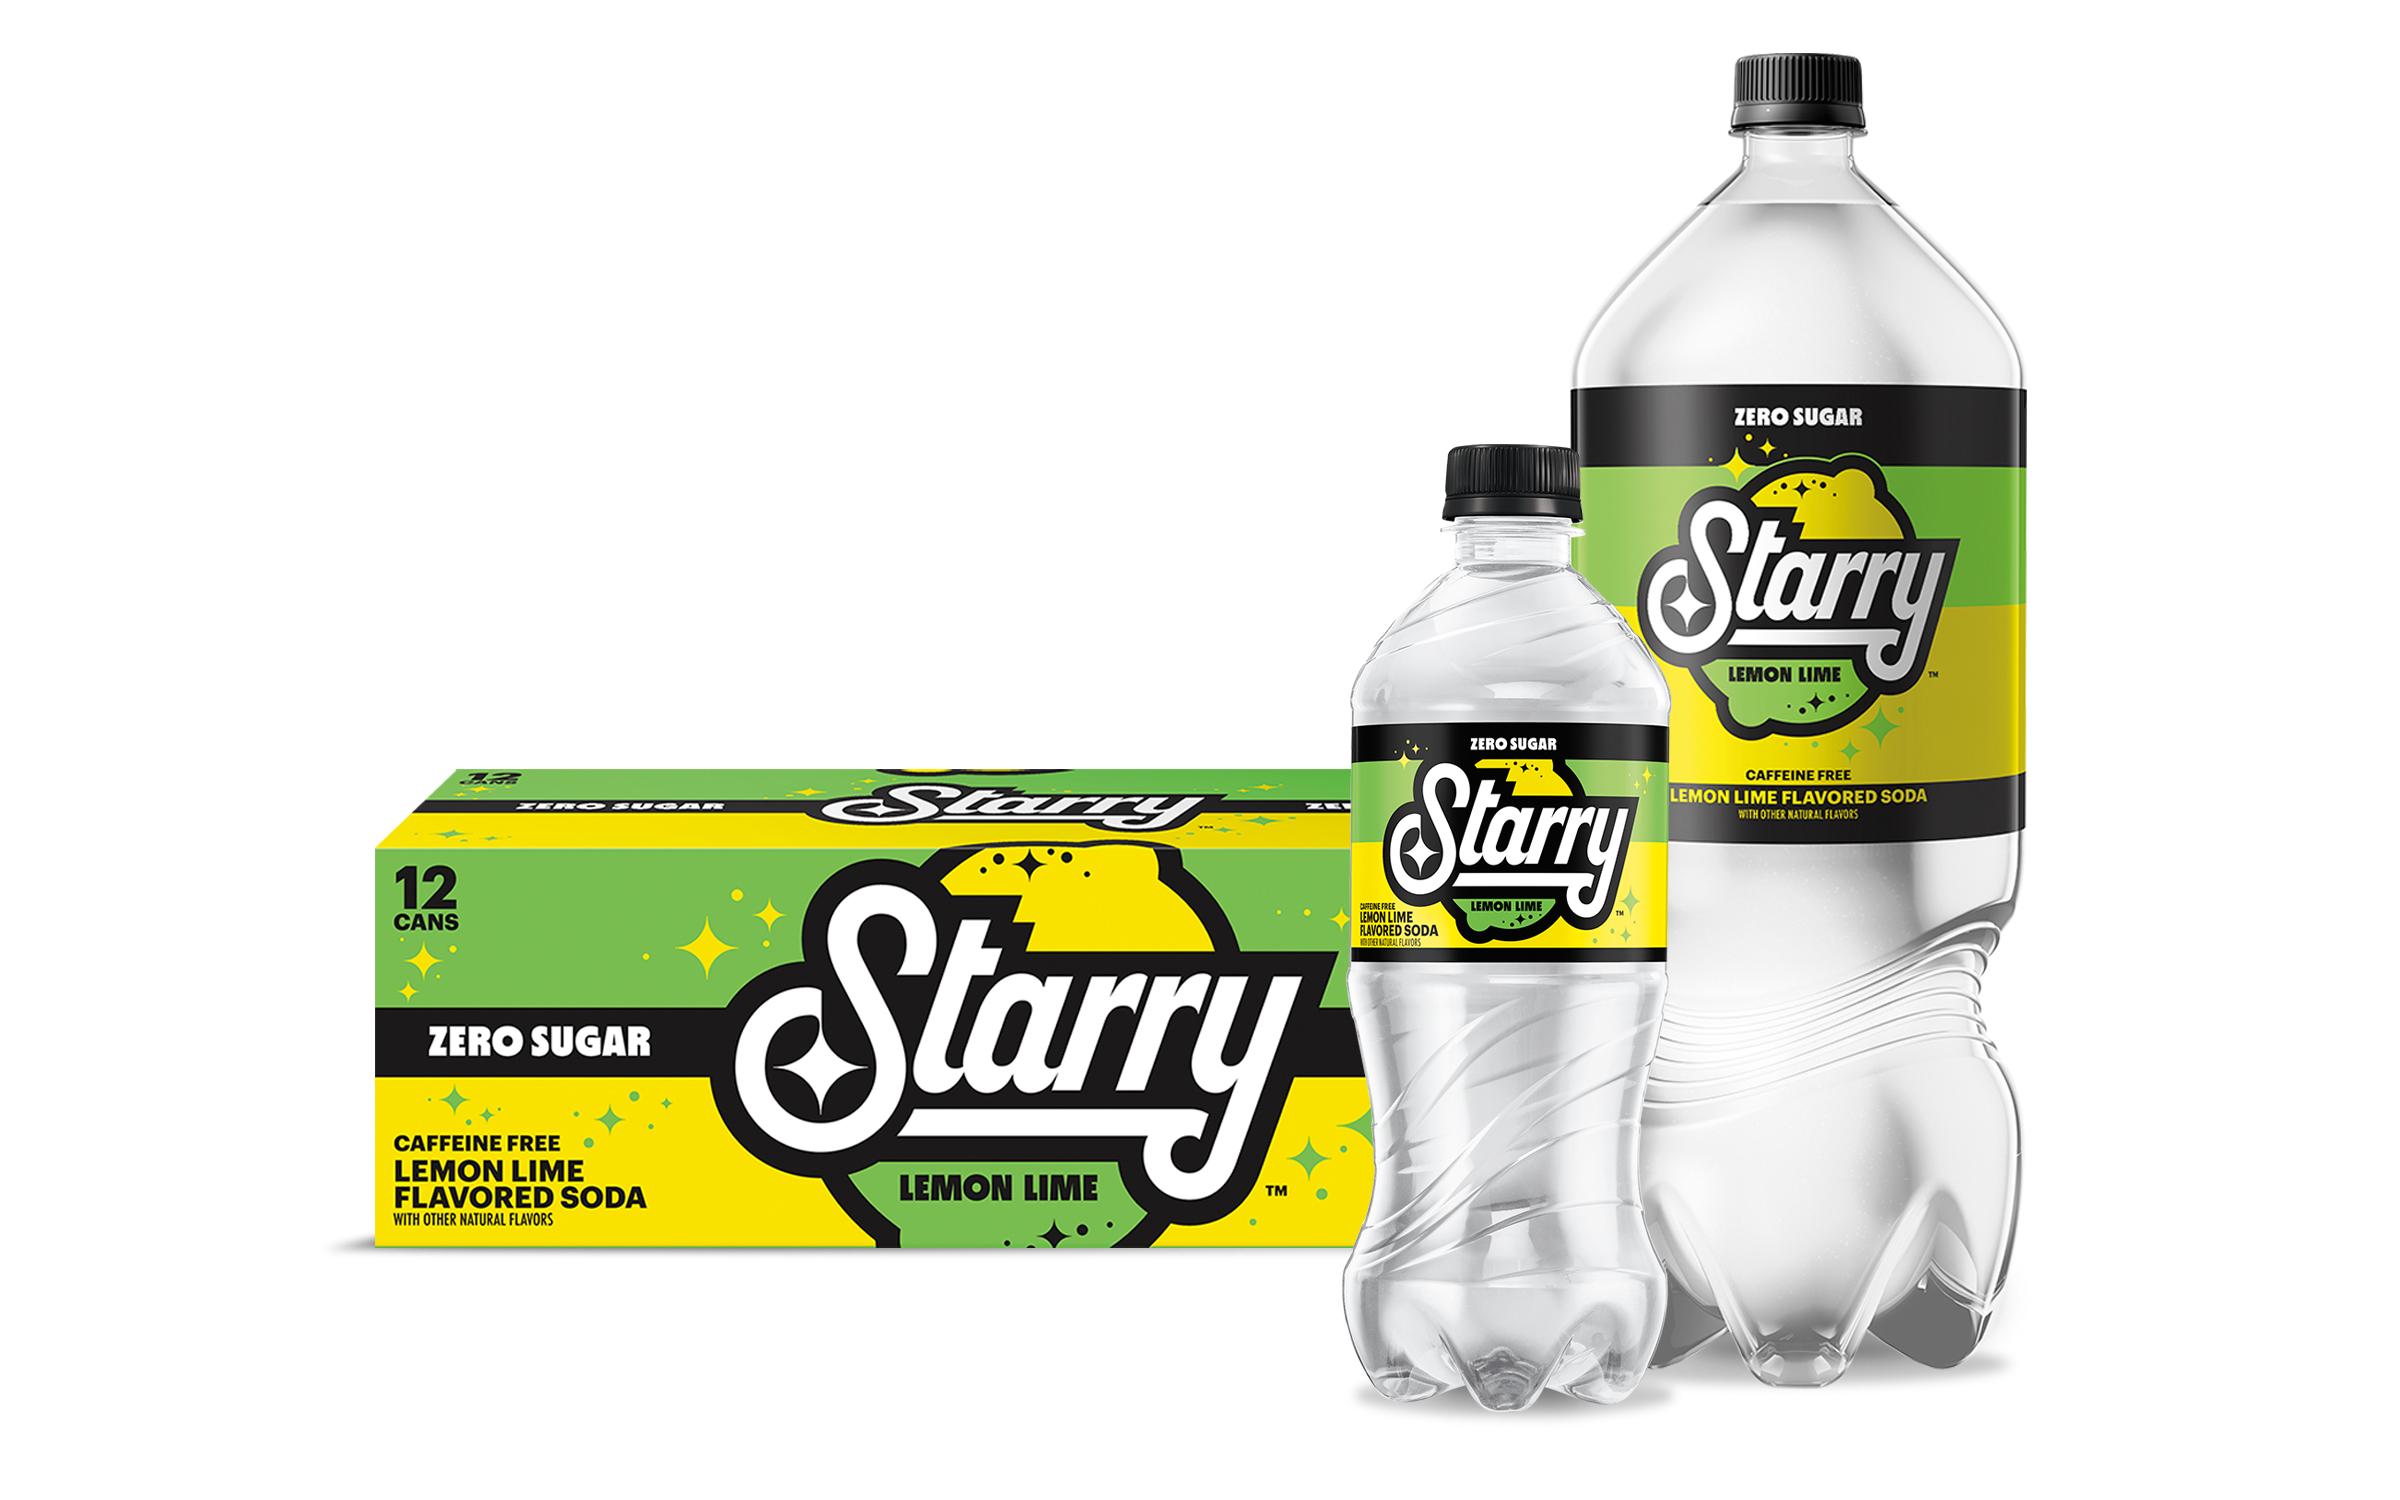 Starry Zero Sugar soda 12-pack, 2-liter, and 16 oz bottle